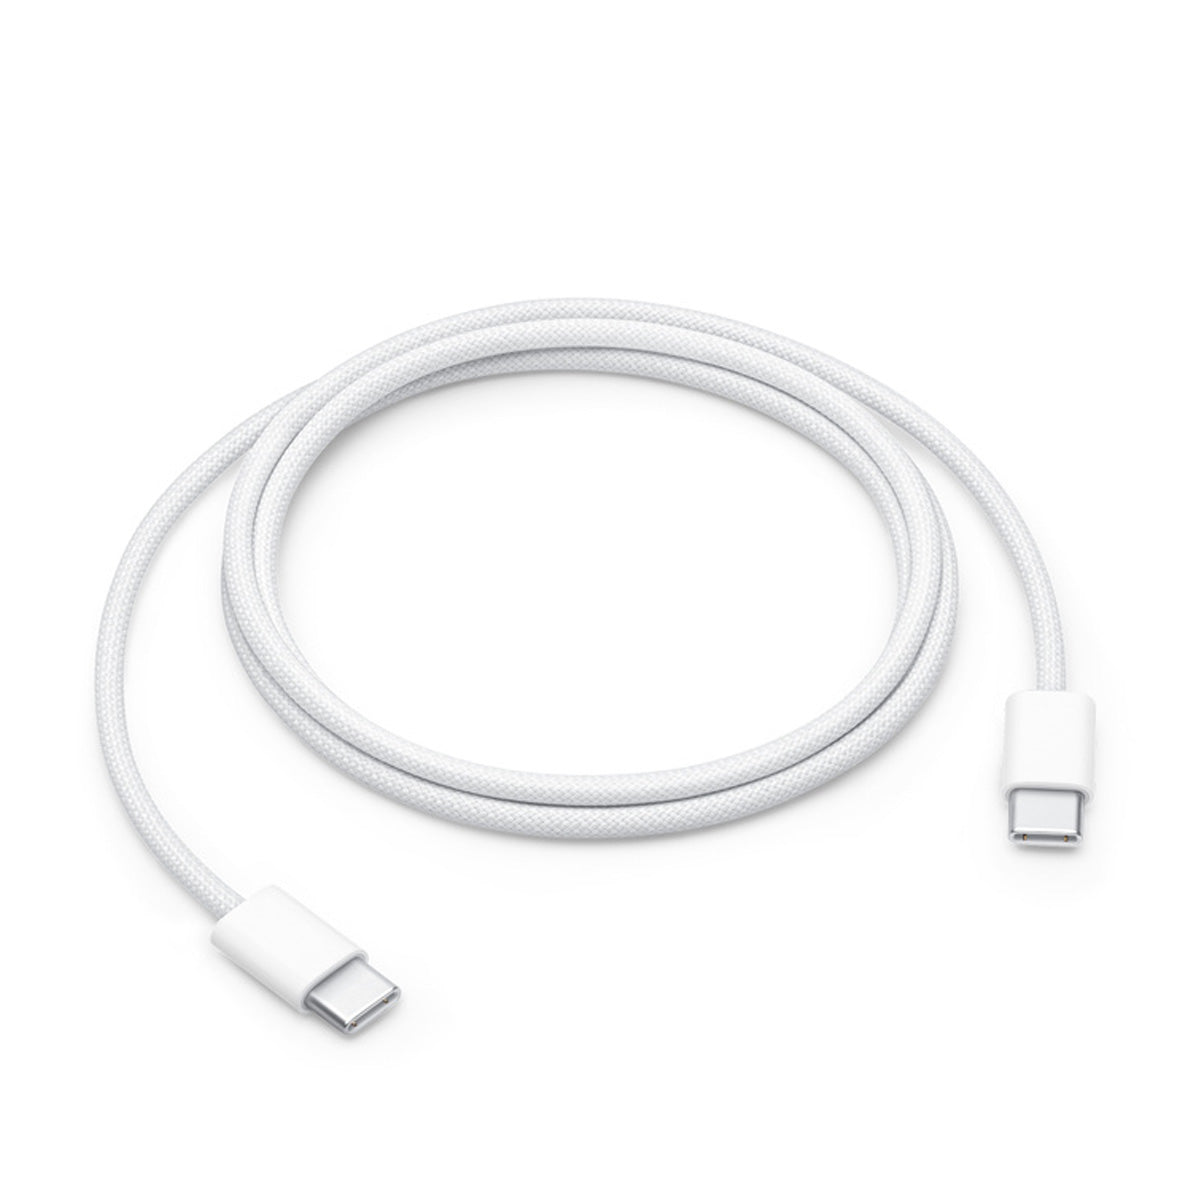 Apple Original USB-C Charge Cable (1M)